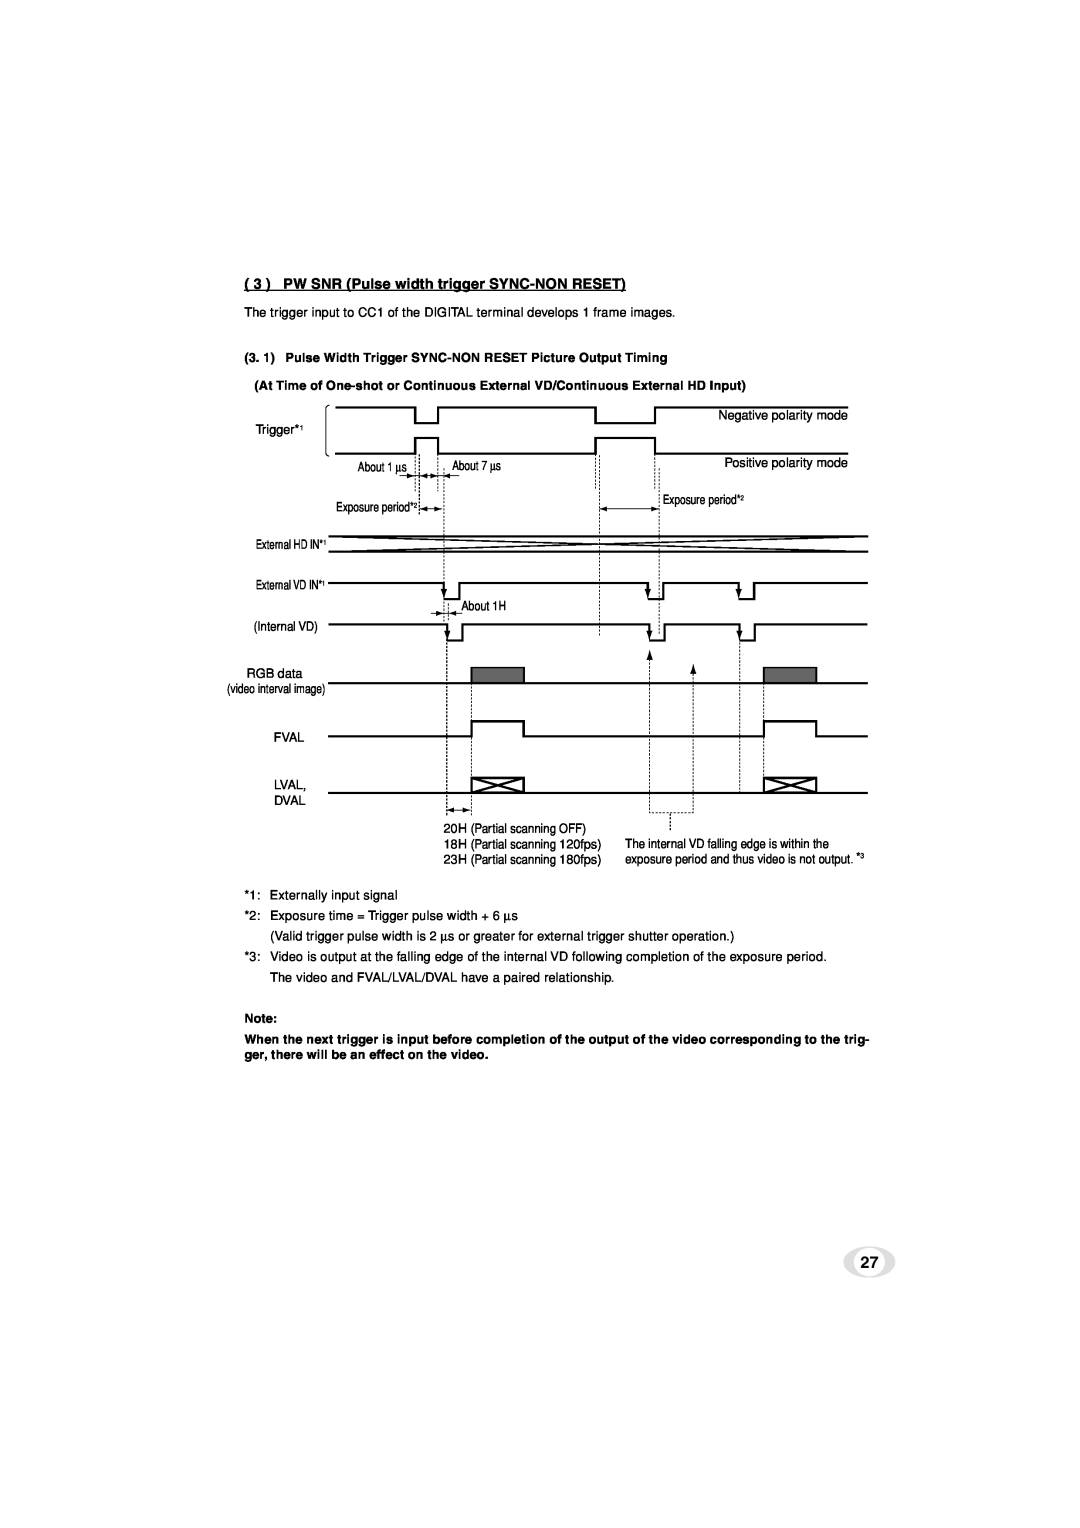 Toshiba IK-TF5C instruction manual PW SNR Pulse width trigger SYNC-NON RESET 